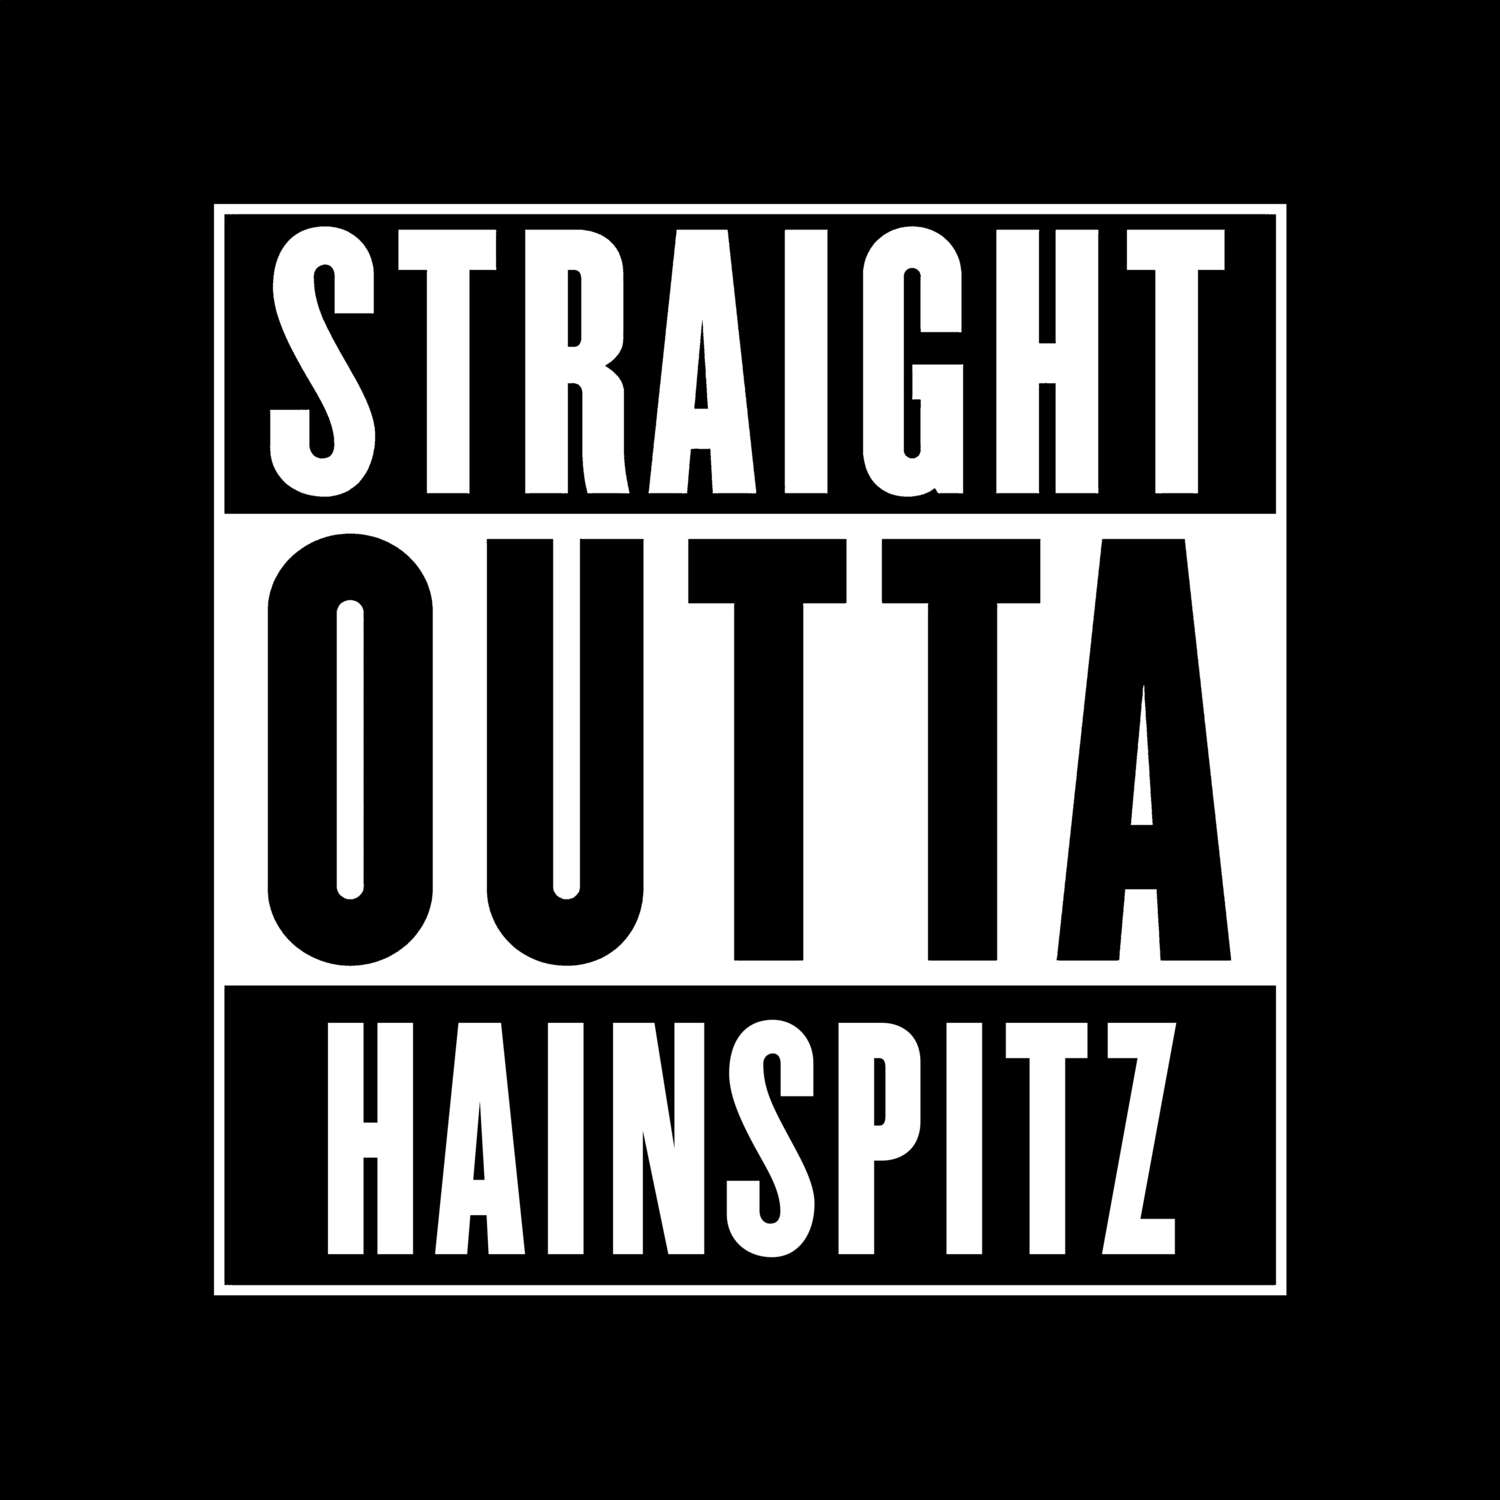 Hainspitz T-Shirt »Straight Outta«